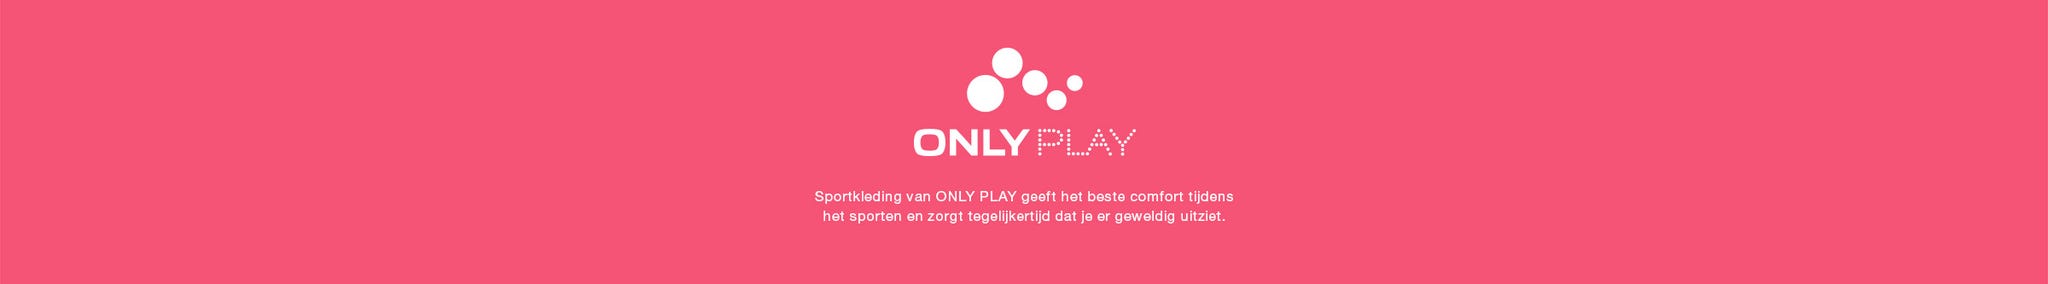 subbrand-lp-play-nl.jpg